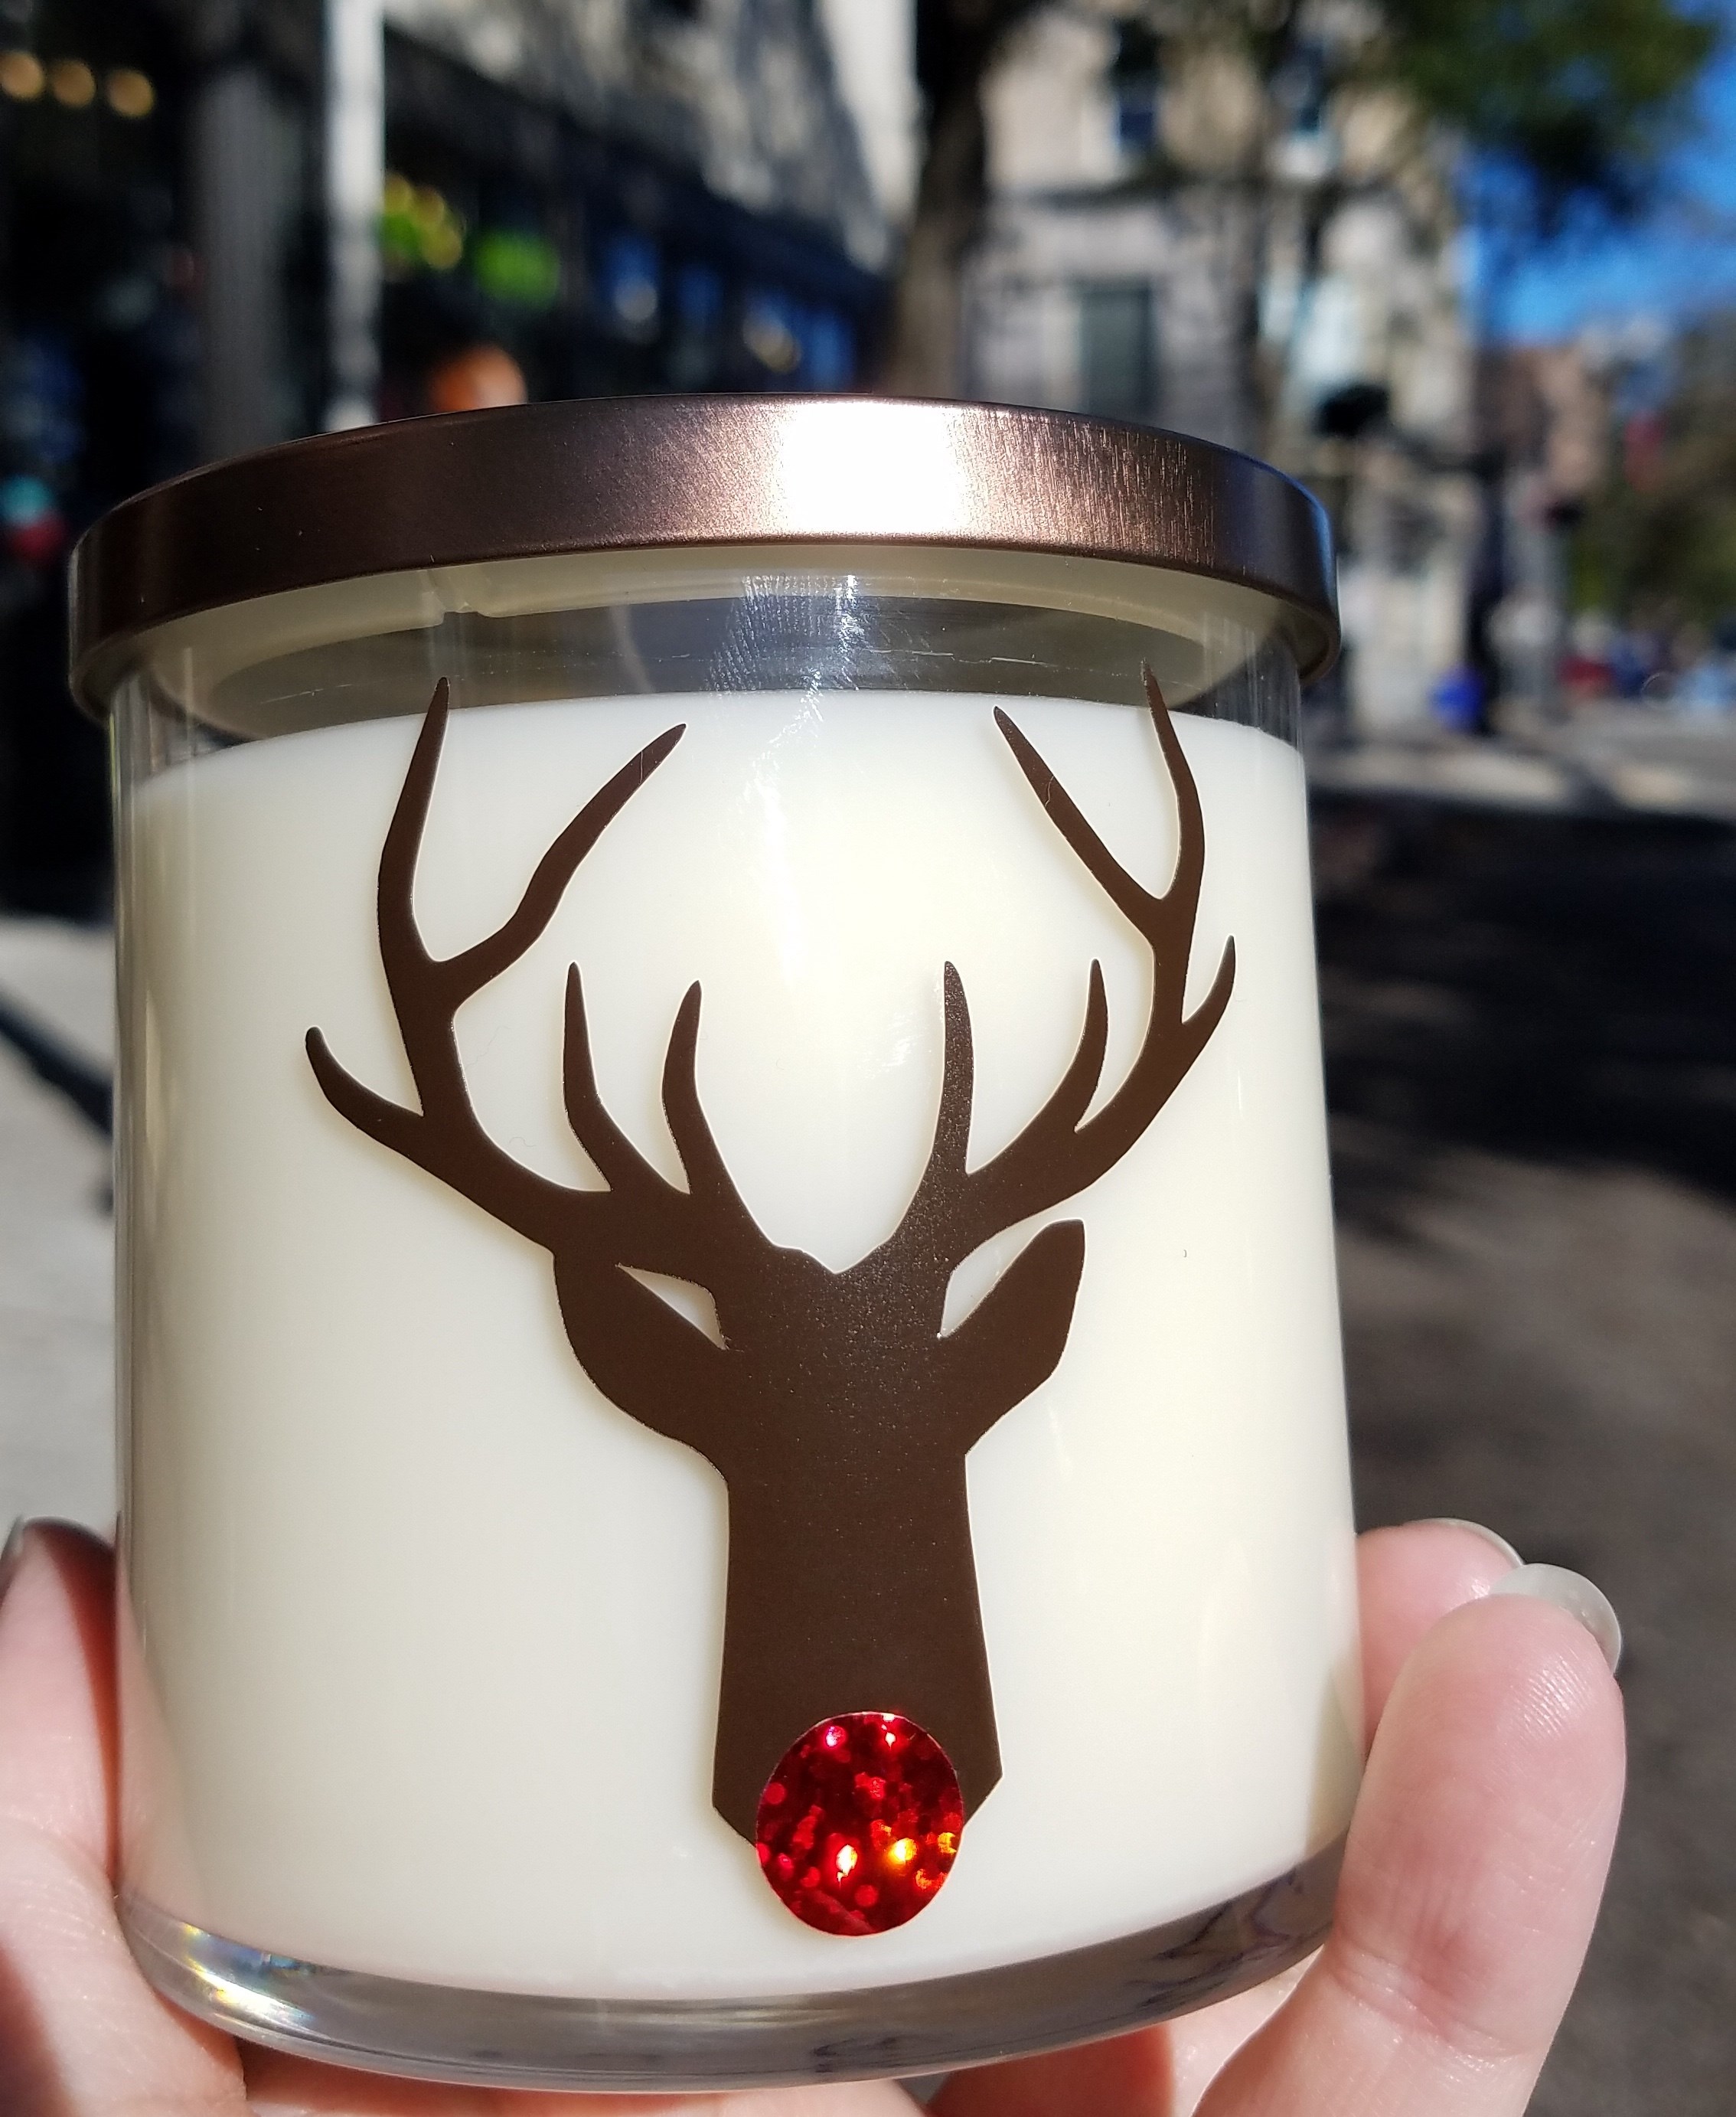 Rudolph jar in Mrs. Claus’ cookies